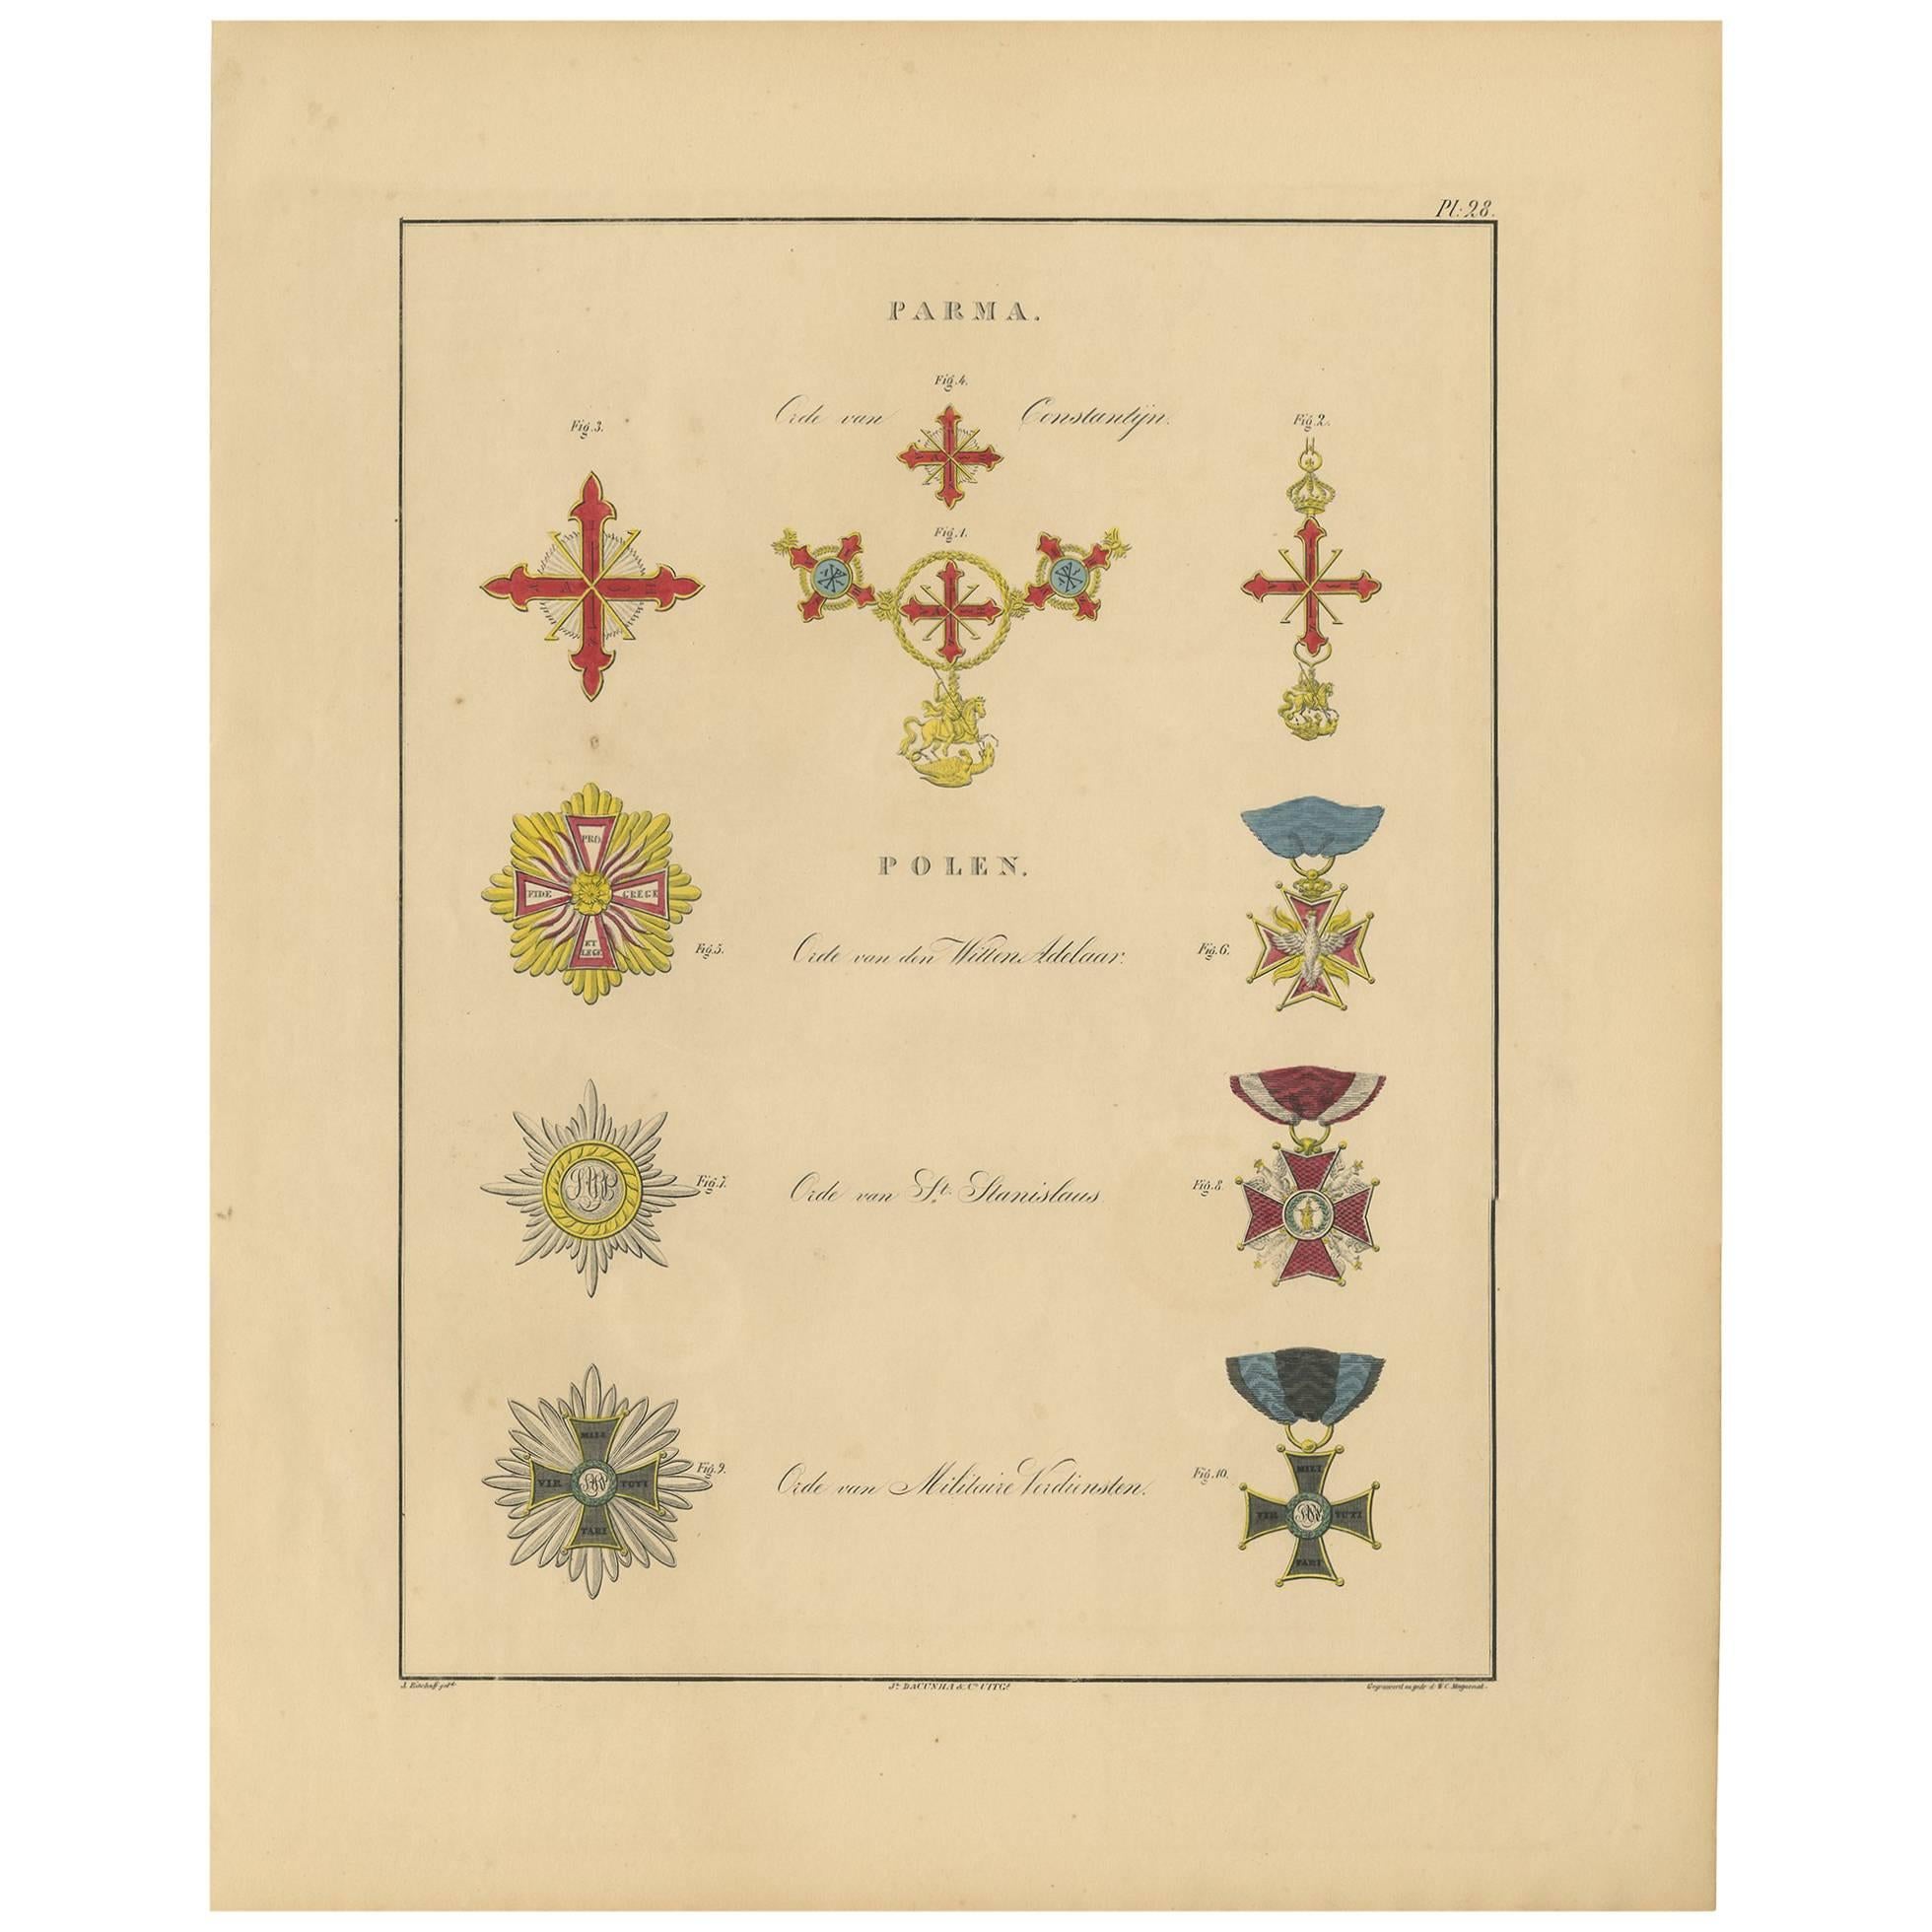 Antique Print of various Medals of Parma & Poland by G.L. de Rochemont, 1843